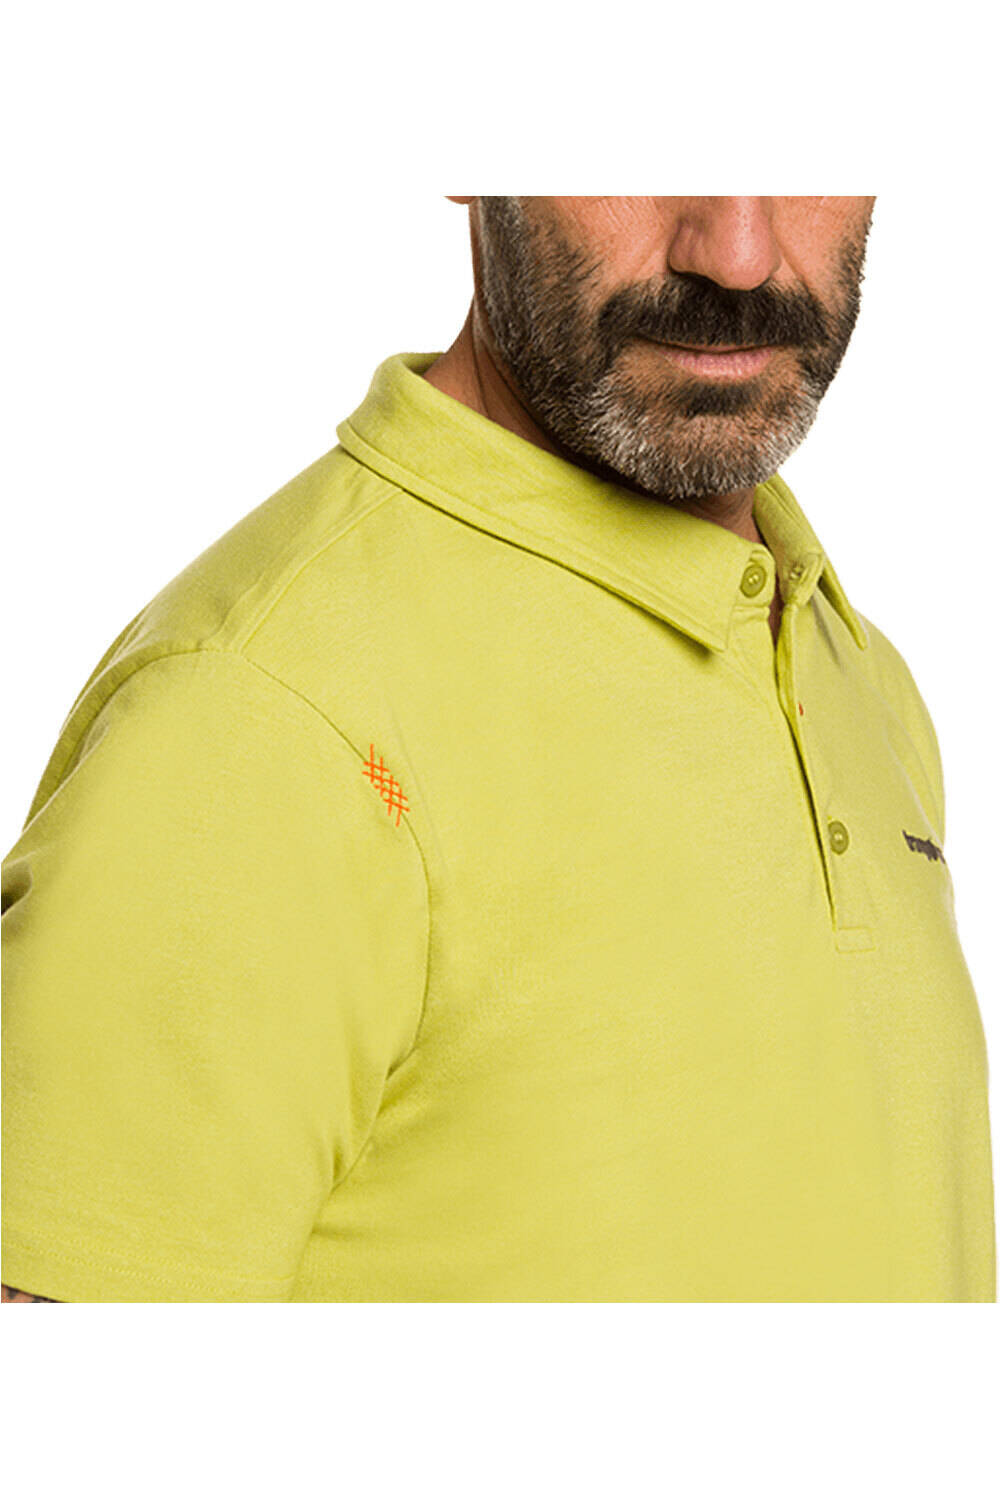 Trango camiseta montaña manga corta hombre POLO FINU 03